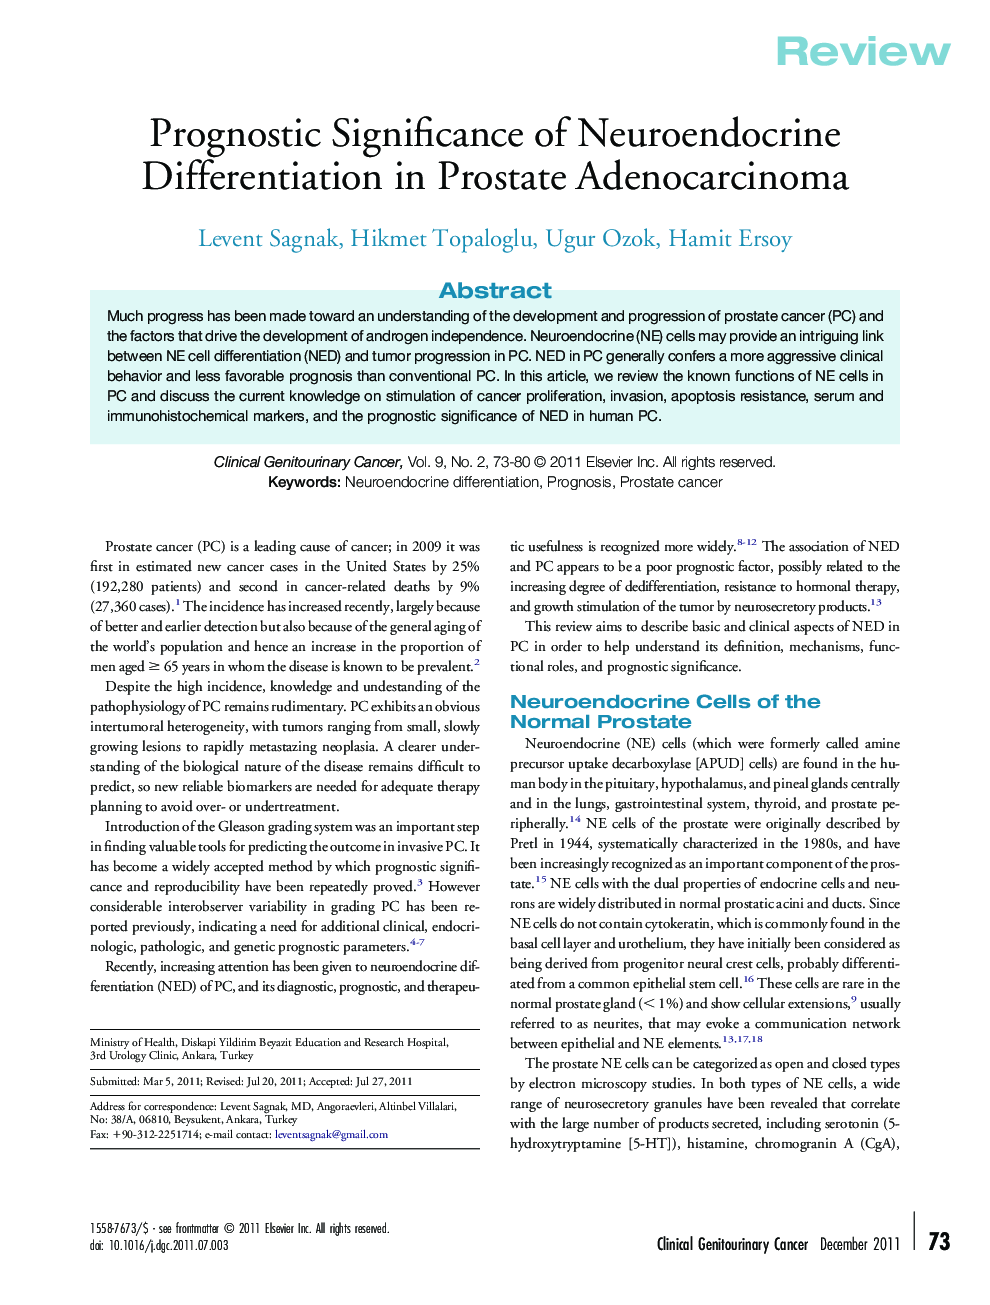 Prognostic Significance of Neuroendocrine Differentiation in Prostate Adenocarcinoma